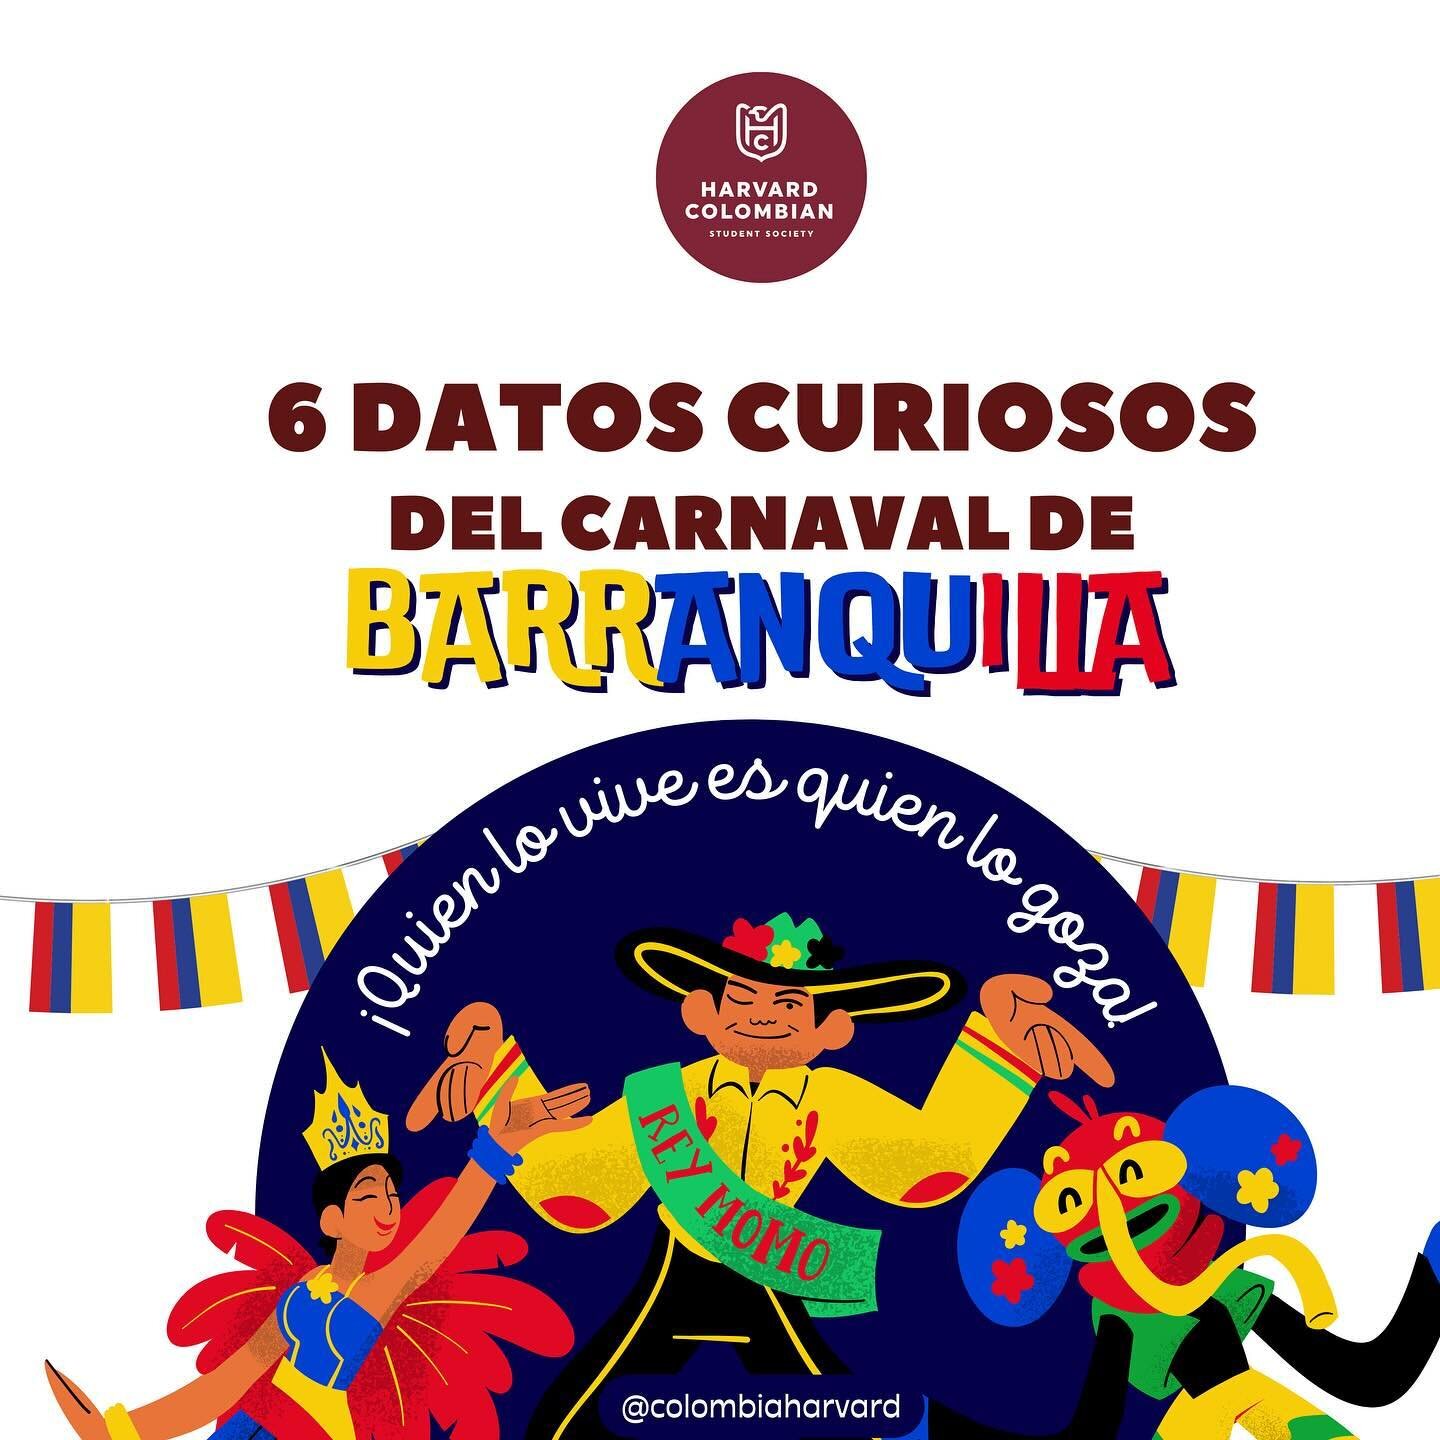 🎉✨ &iexcl;Descubre los secretos del Carnaval de Barranquilla! 🎭🇨🇴 #CarnavalDeBarranquilla #FiestaInfinita
1️⃣ Or&iacute;genes M&iacute;sticos: &iquest;Sab&iacute;as que el Carnaval de Barranquilla se remonta a m&aacute;s de 100 a&ntilde;os atr&aa